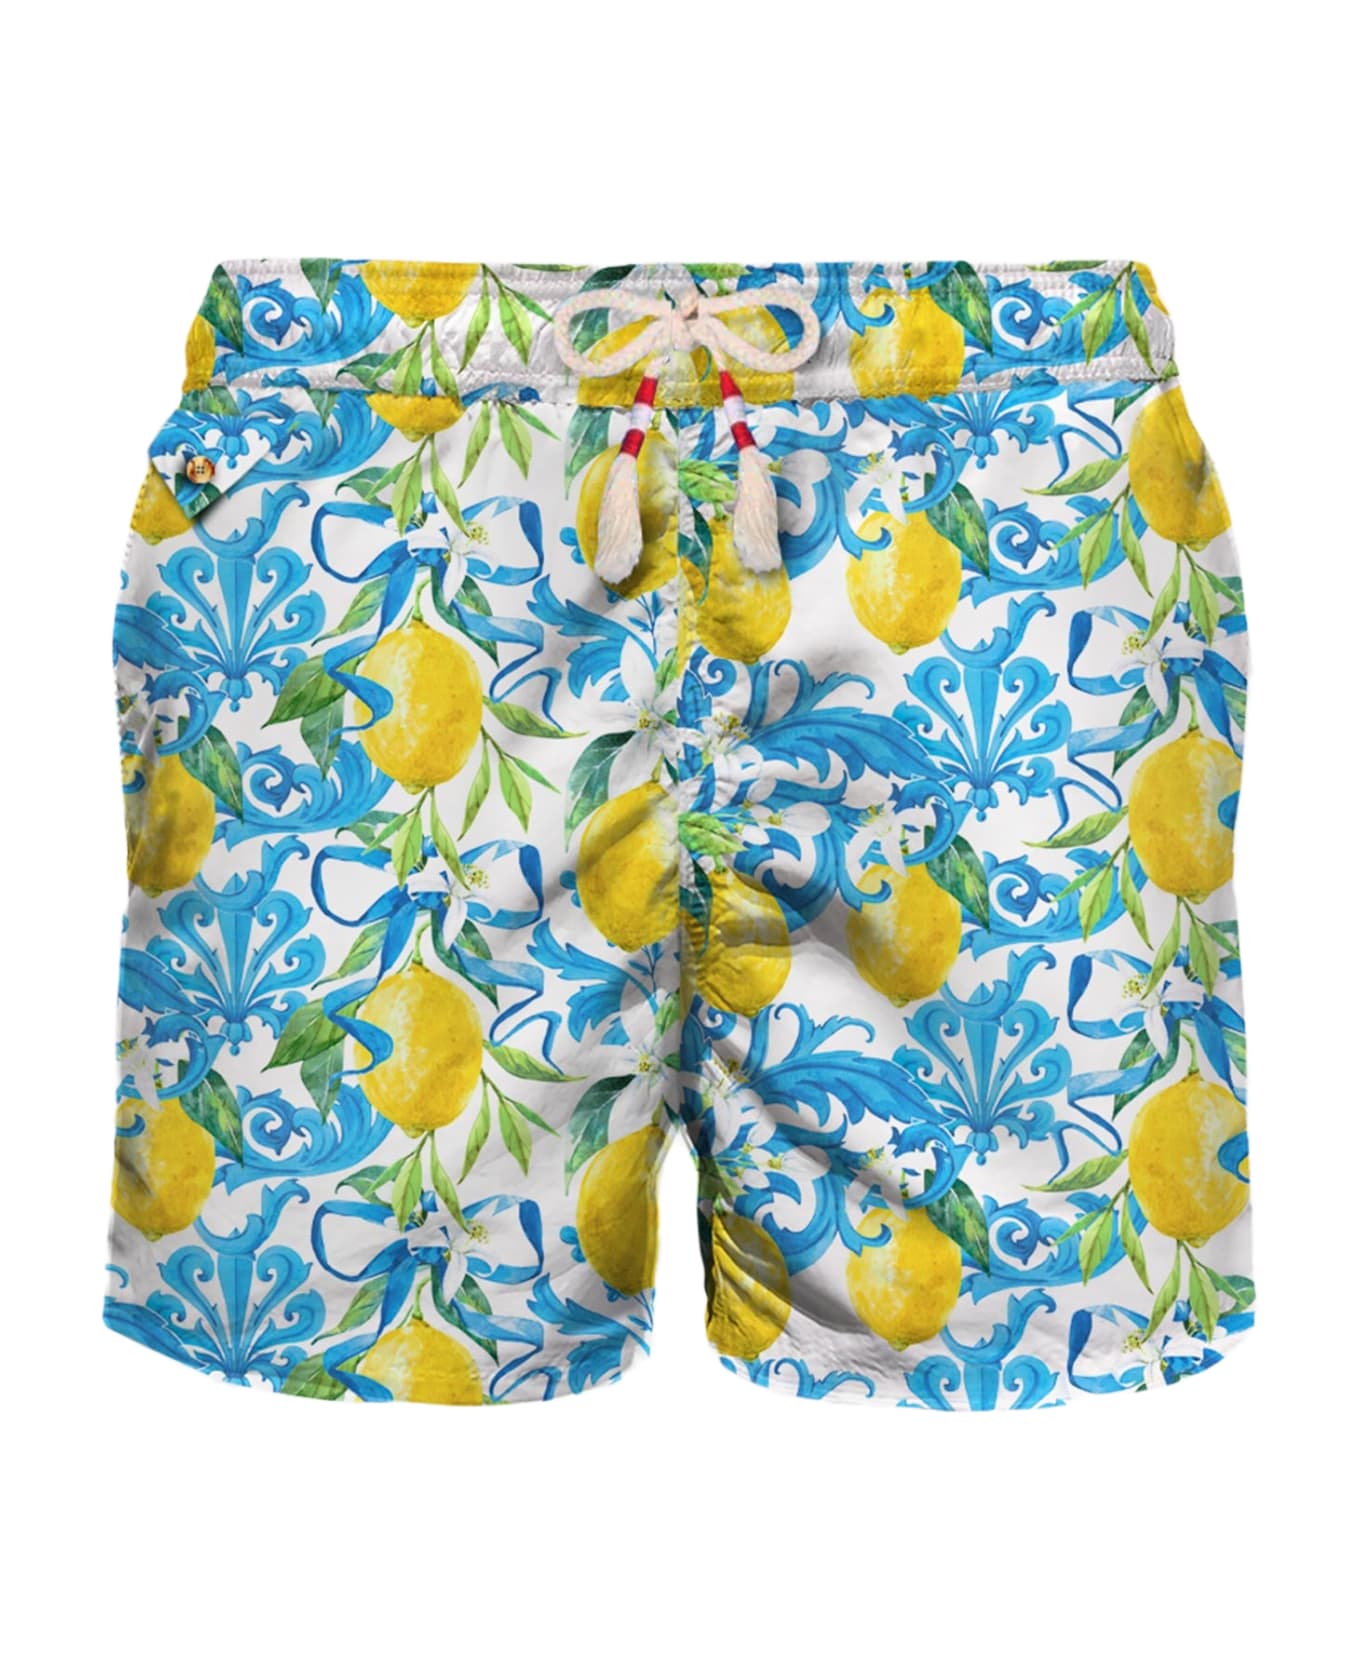 MC2 Saint Barth Man Light Fabric Swim Shorts With Lemon Print - WHITE